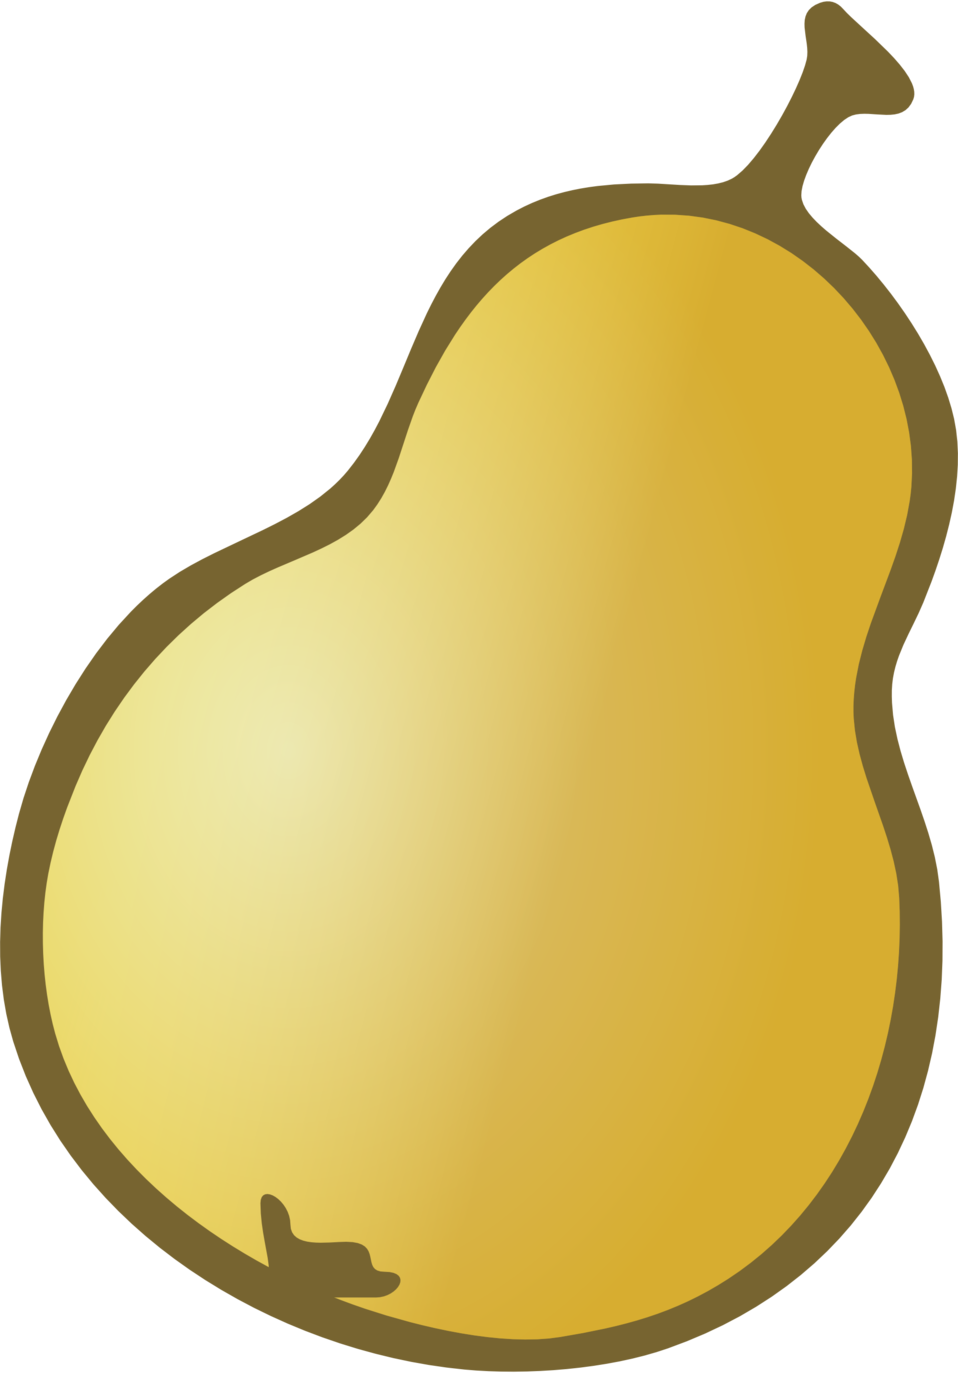 Public domain clip art. Desert clipart prickly pear